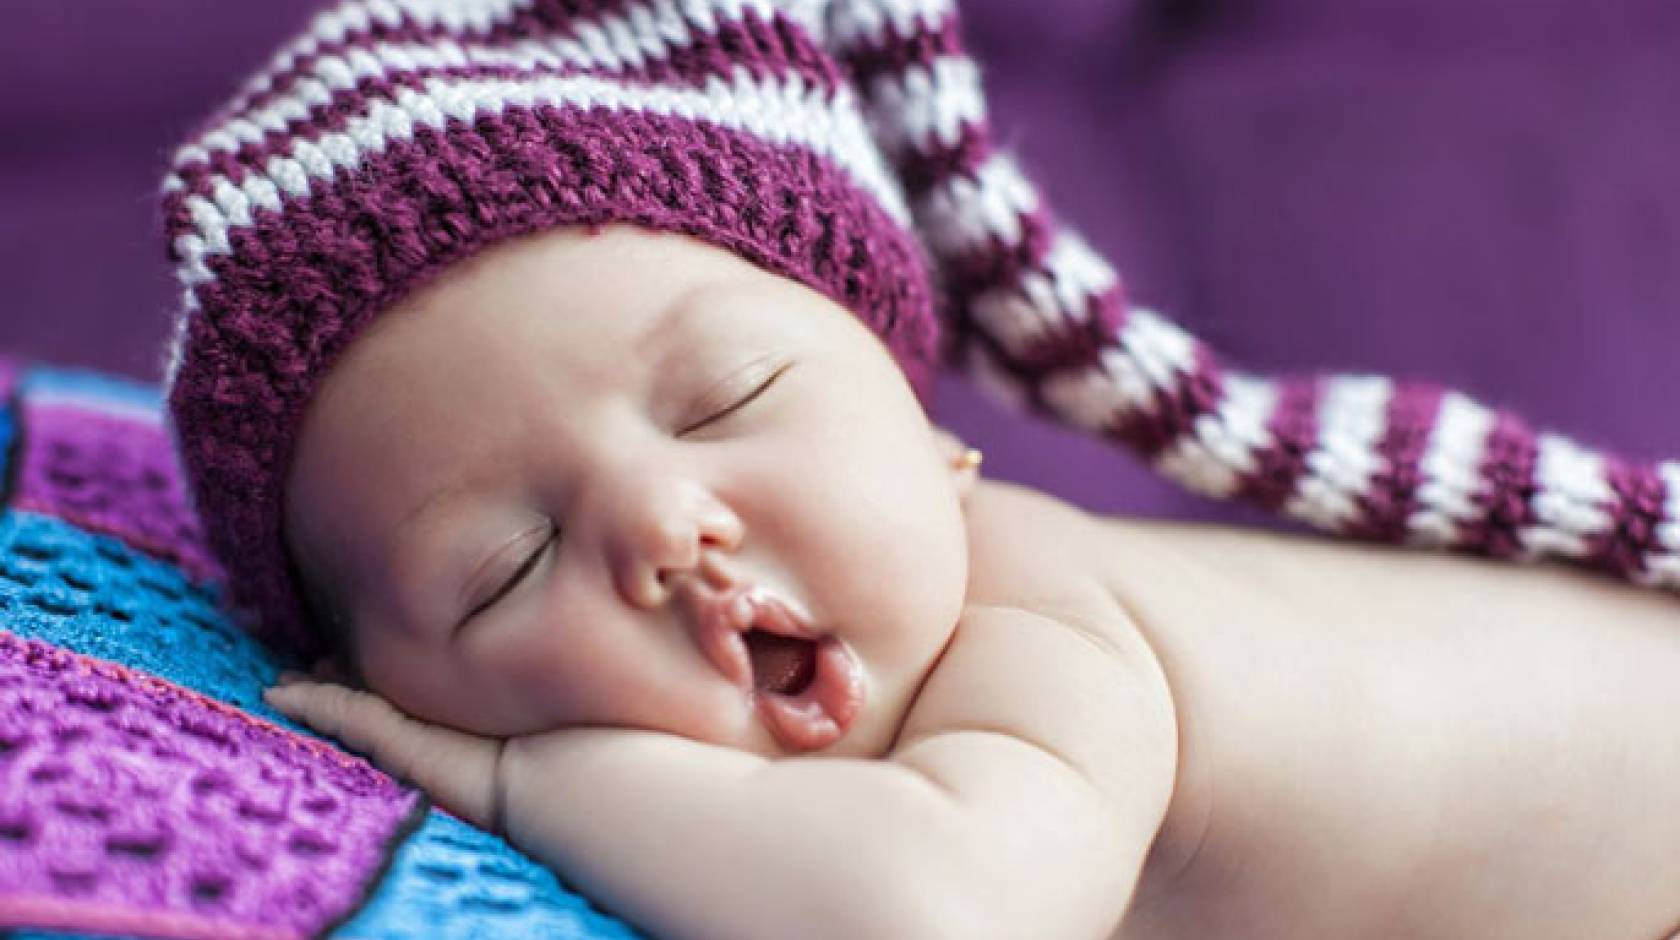 Baby sleeping in purple hat